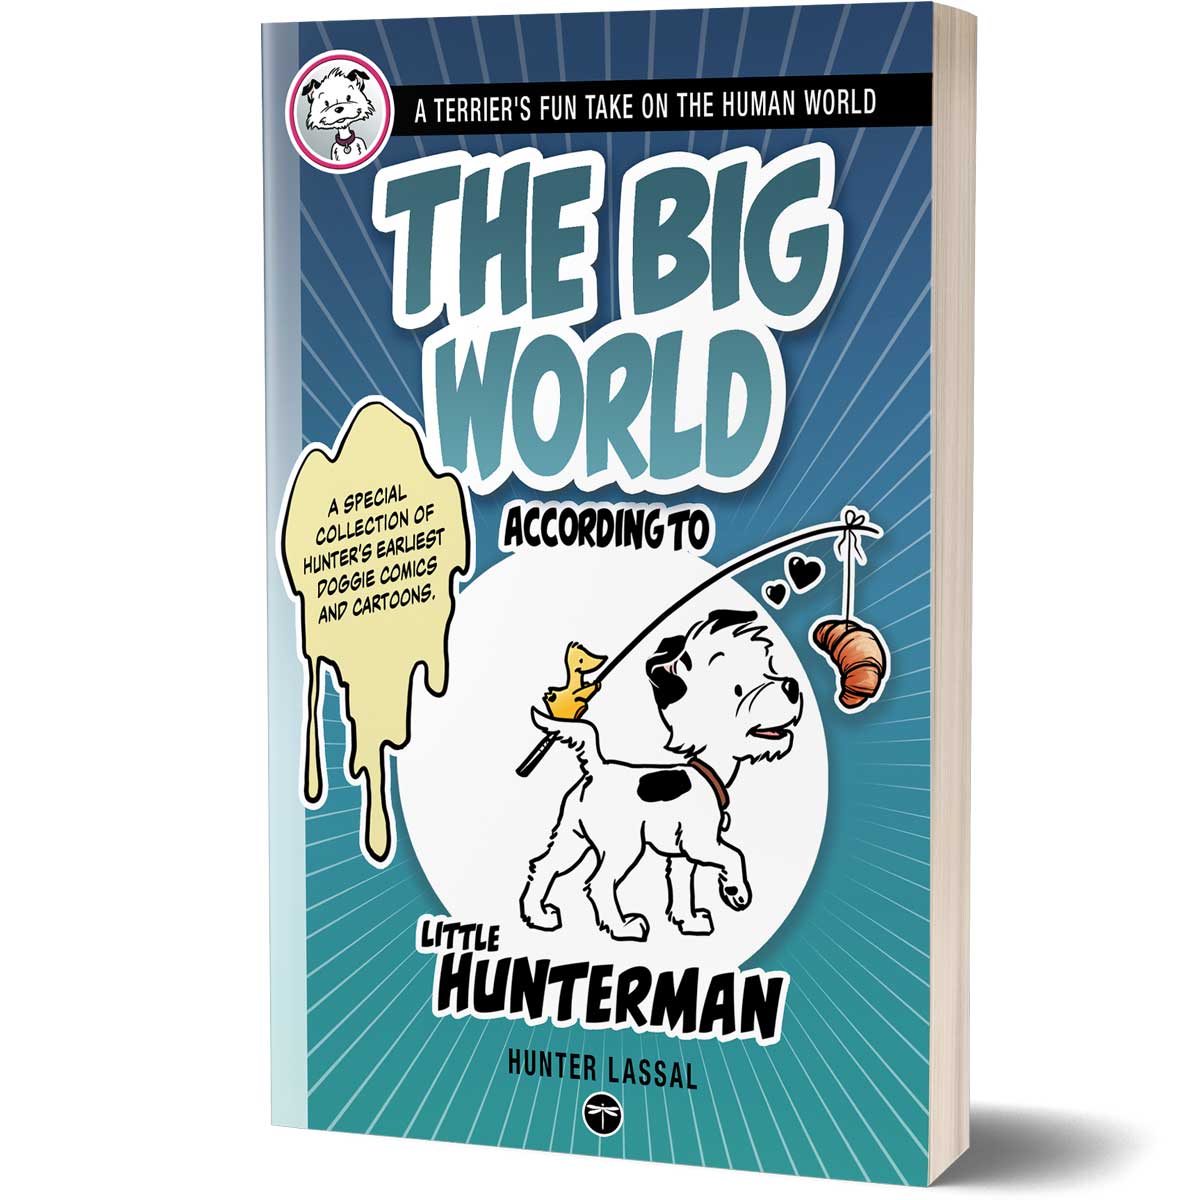 The Big World According to Little Hunterman 8.5 x 5.5 Paperback